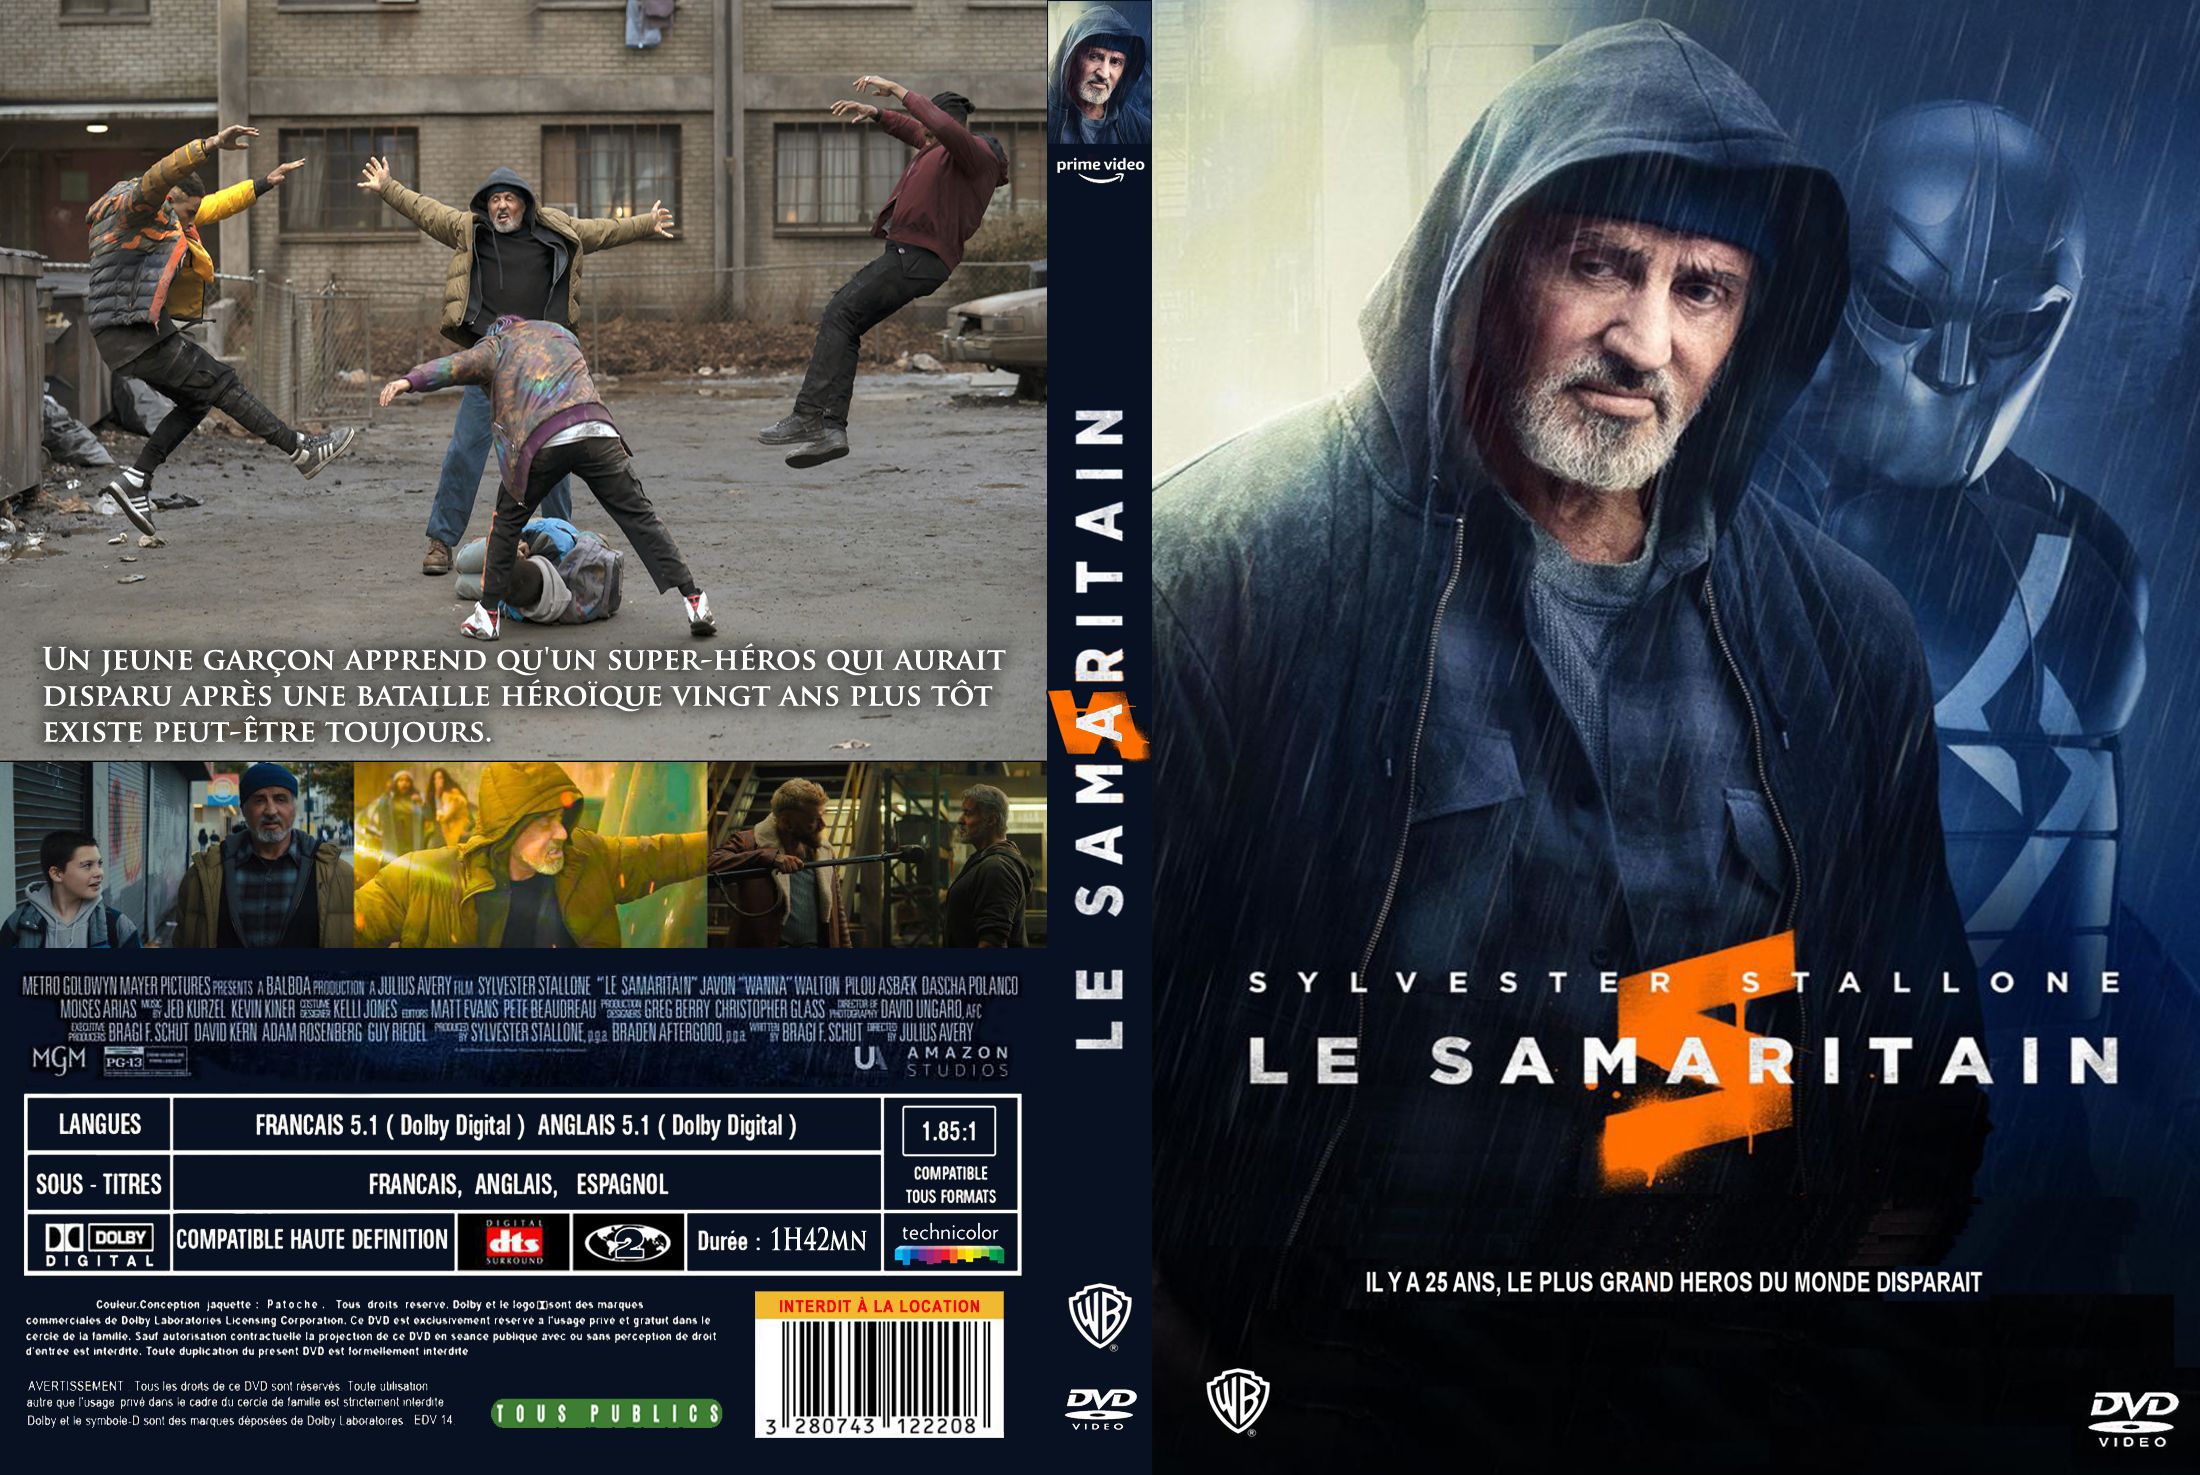 Jaquette DVD Le samaritain custom